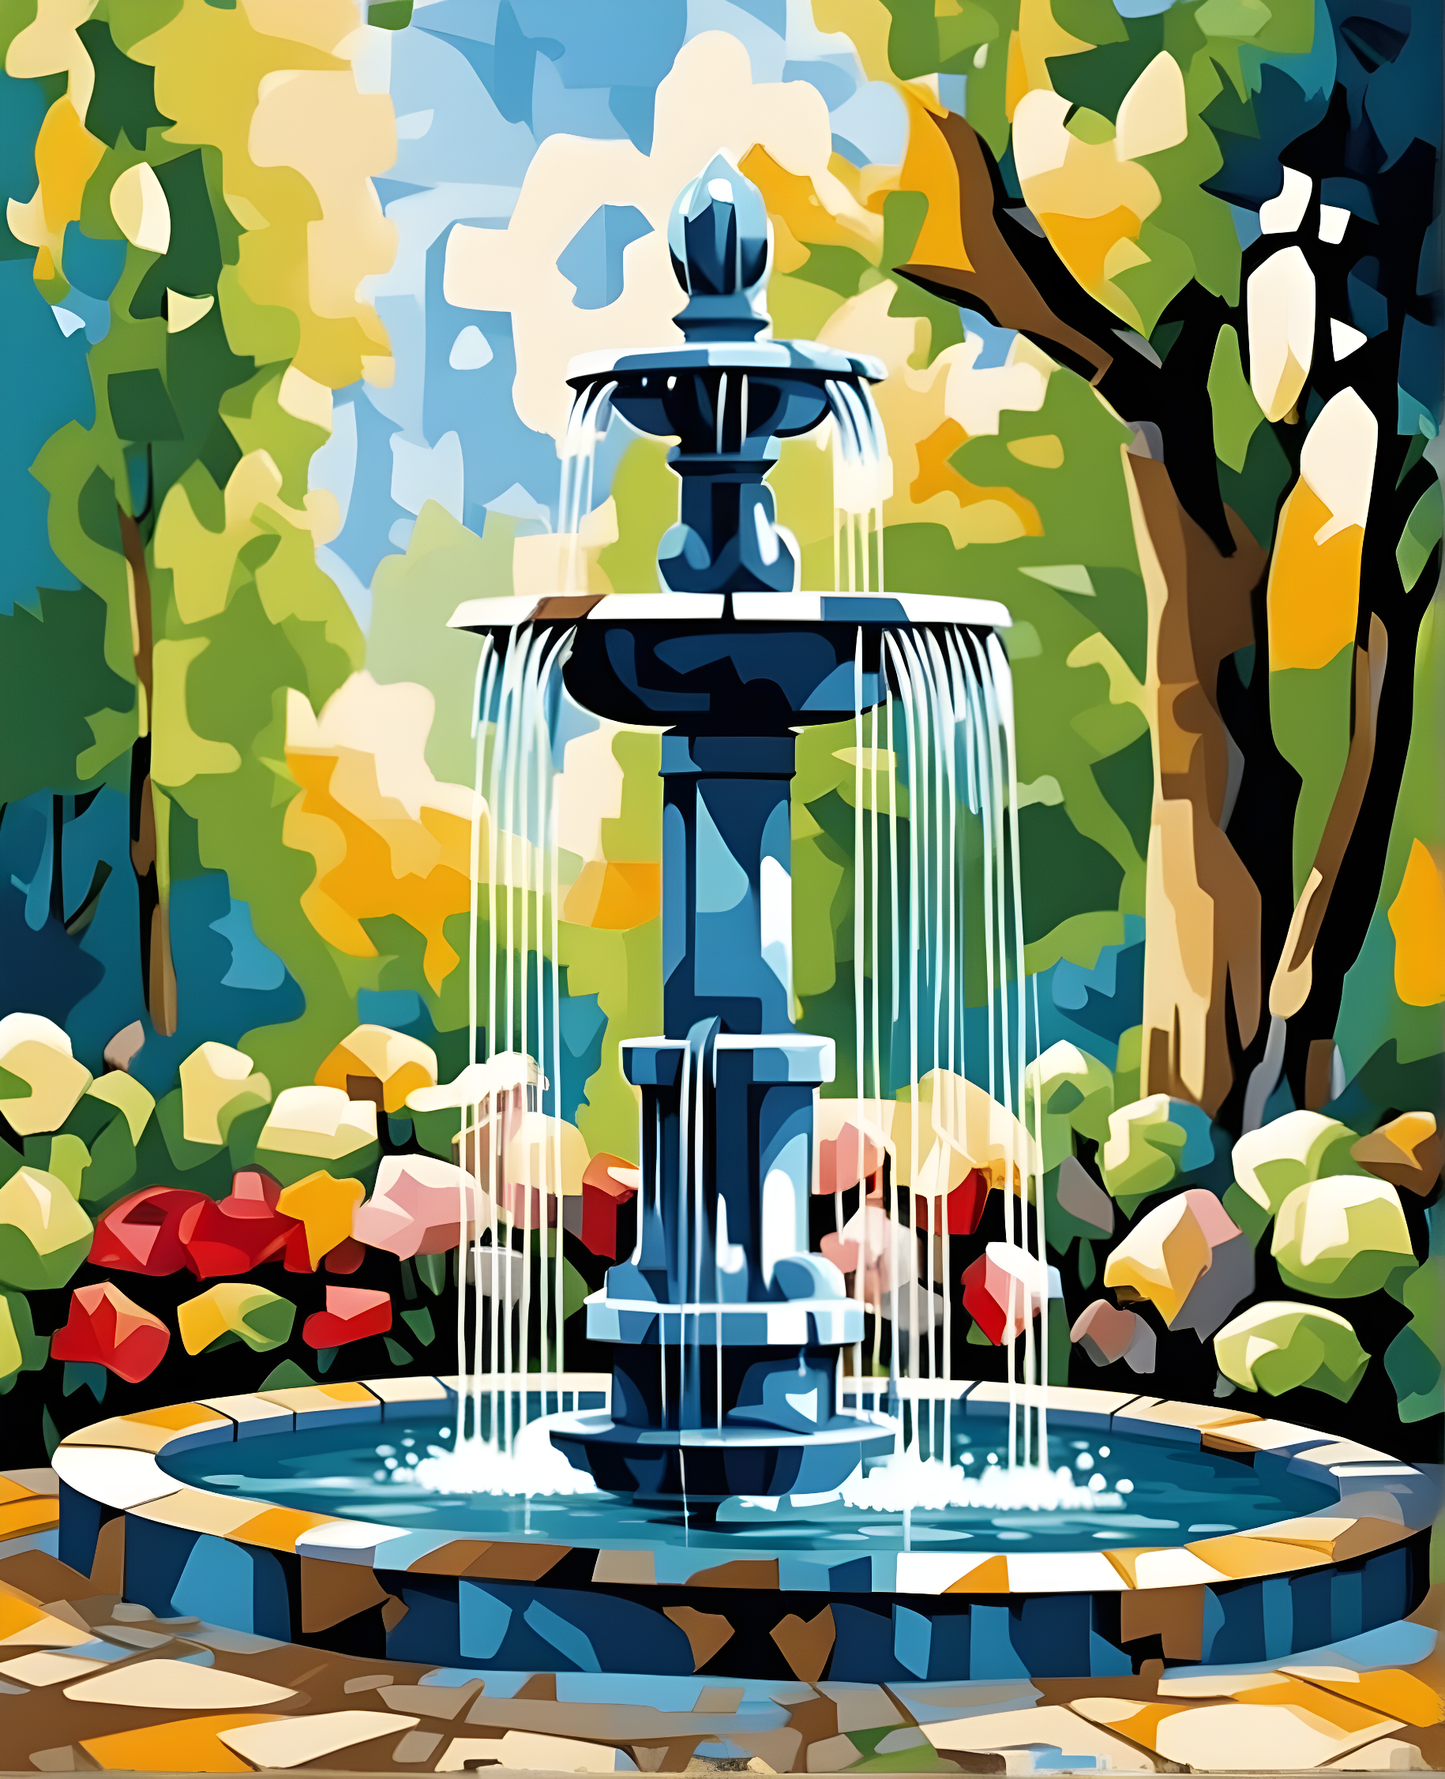 Garden Fountain (1) - Van-Go Paint-By-Number Kit